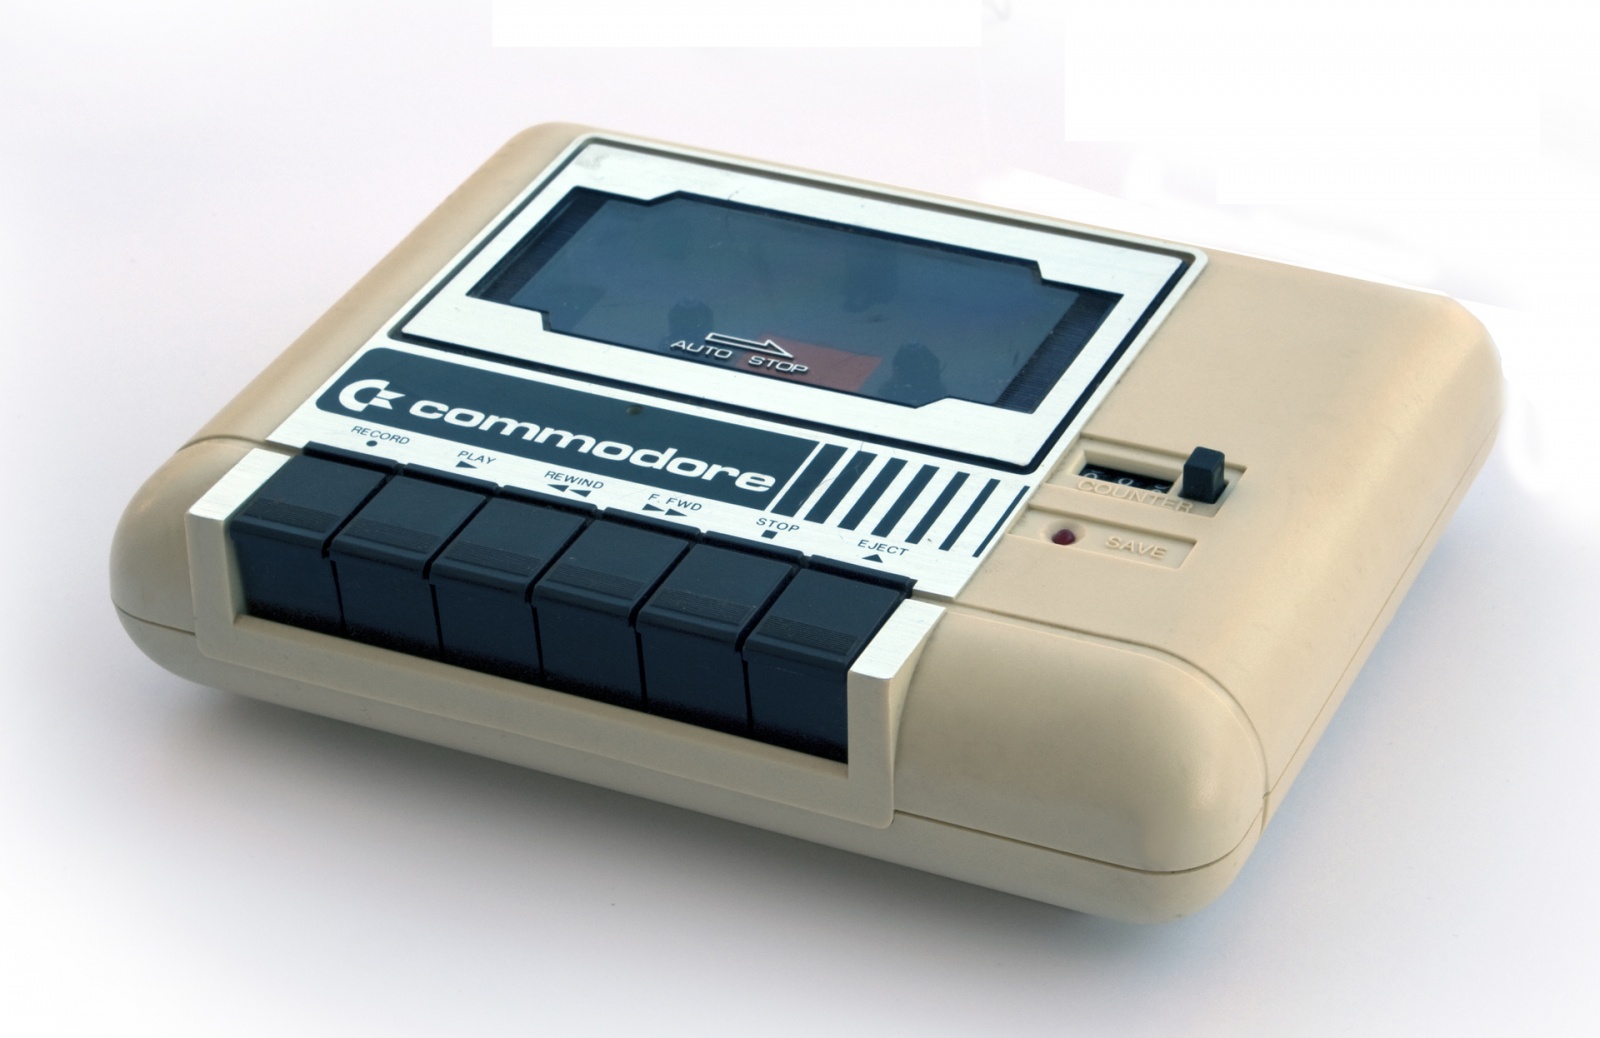 Commodore PET 2001 — домашний компьютер из прошлого - 7